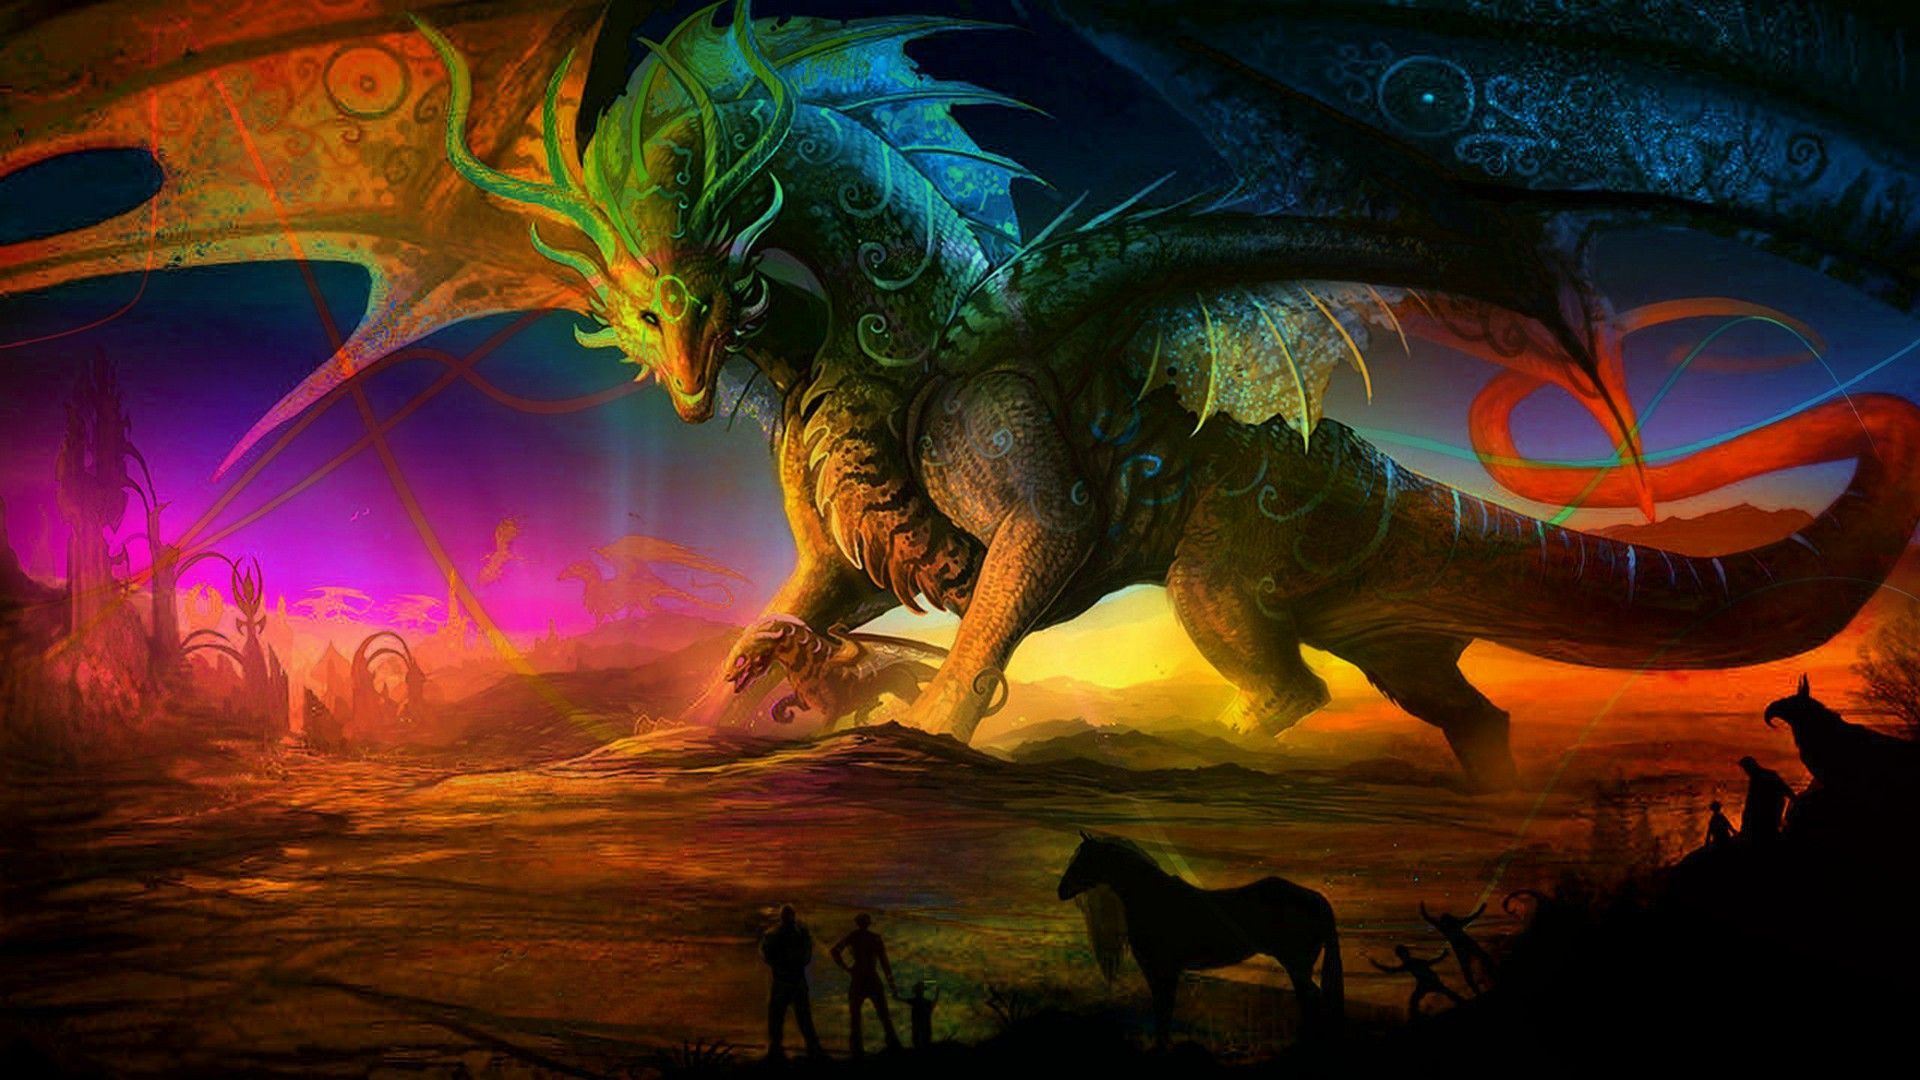  Drachen Hintergrundbild 1920x1080. Fantasy Art Desktop Background Wallpaper HD. Fantasy wall art, Fantasy picture, Dragon image